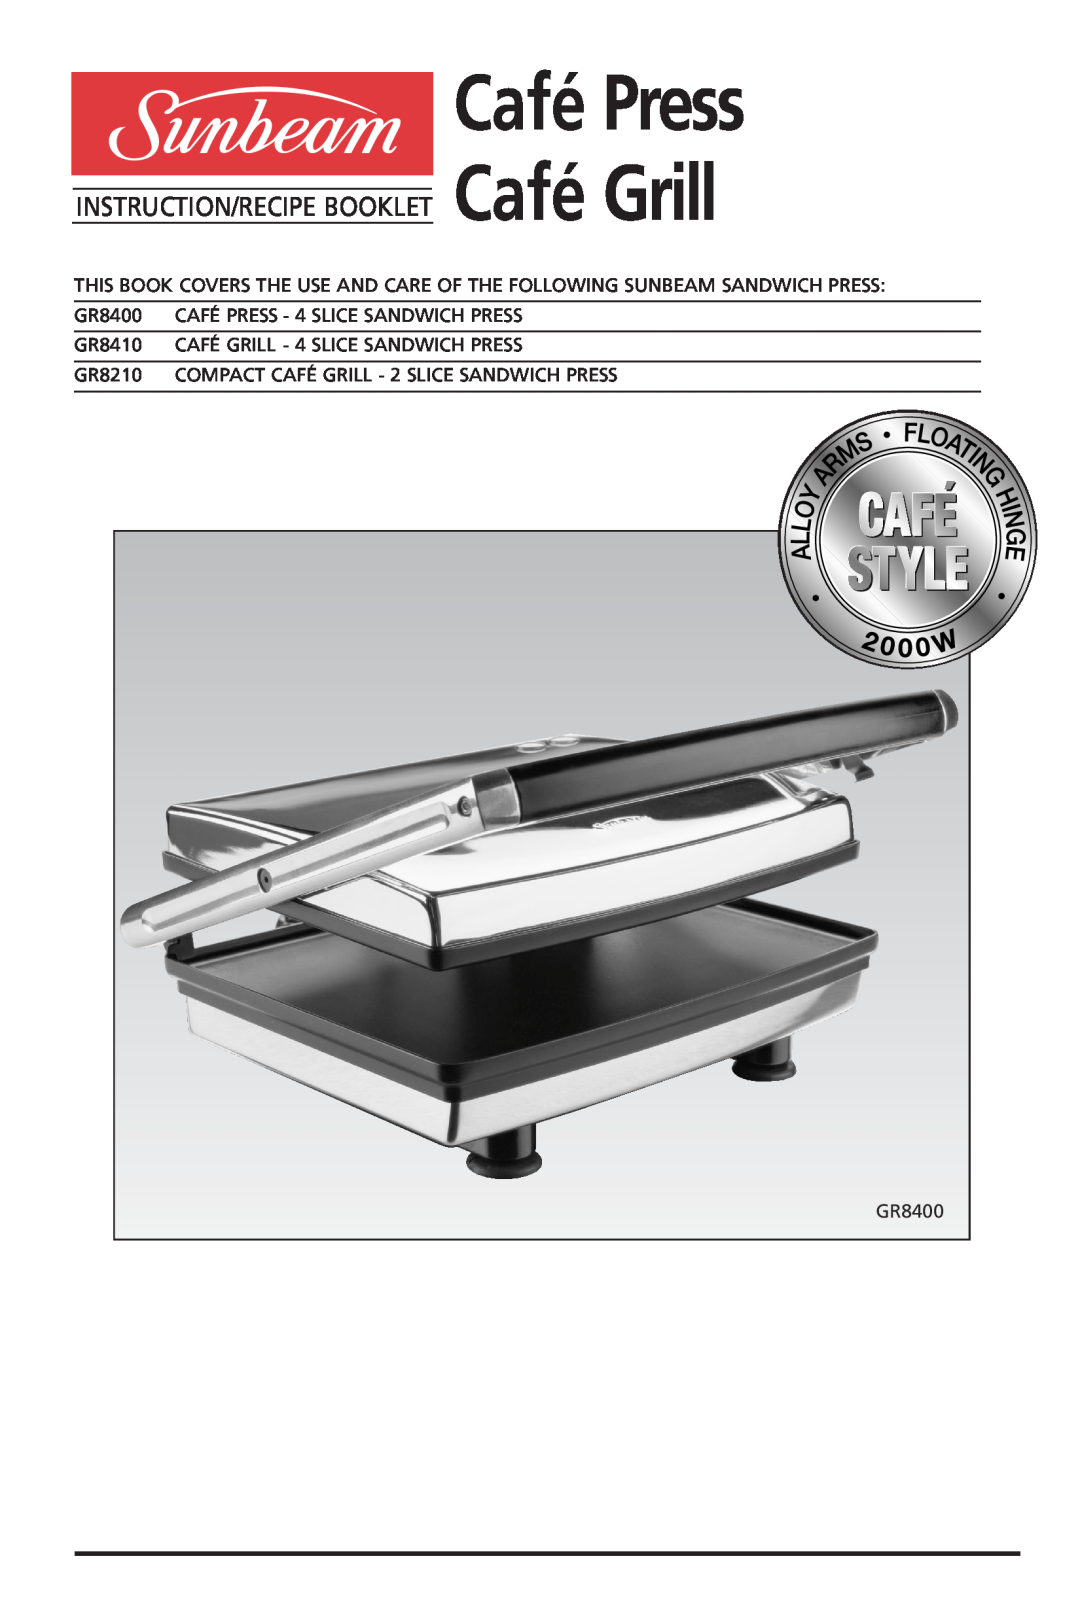 Sunbeam GR8210, GR8400B manual Café Press & Café Grill, Instruction/Recipe Booklet 